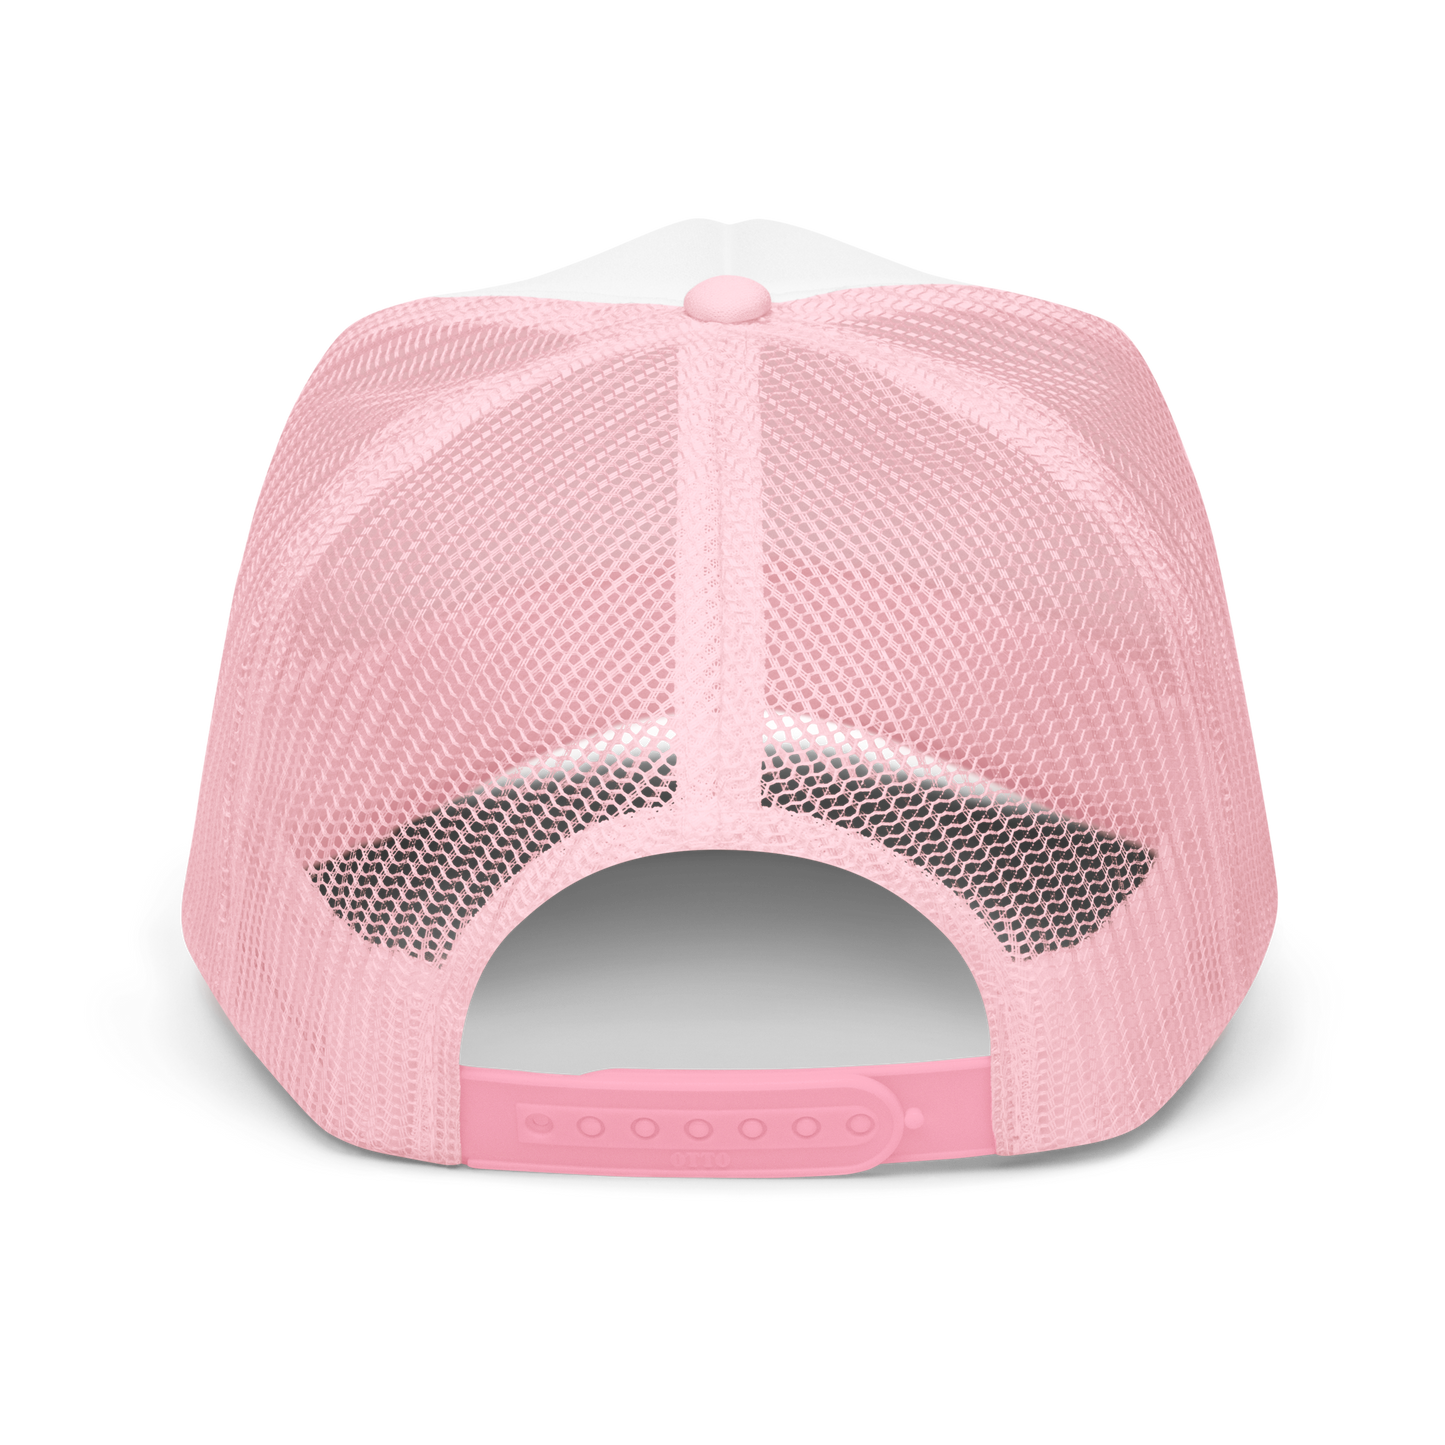 LC Pink Multi-layer trucker hat